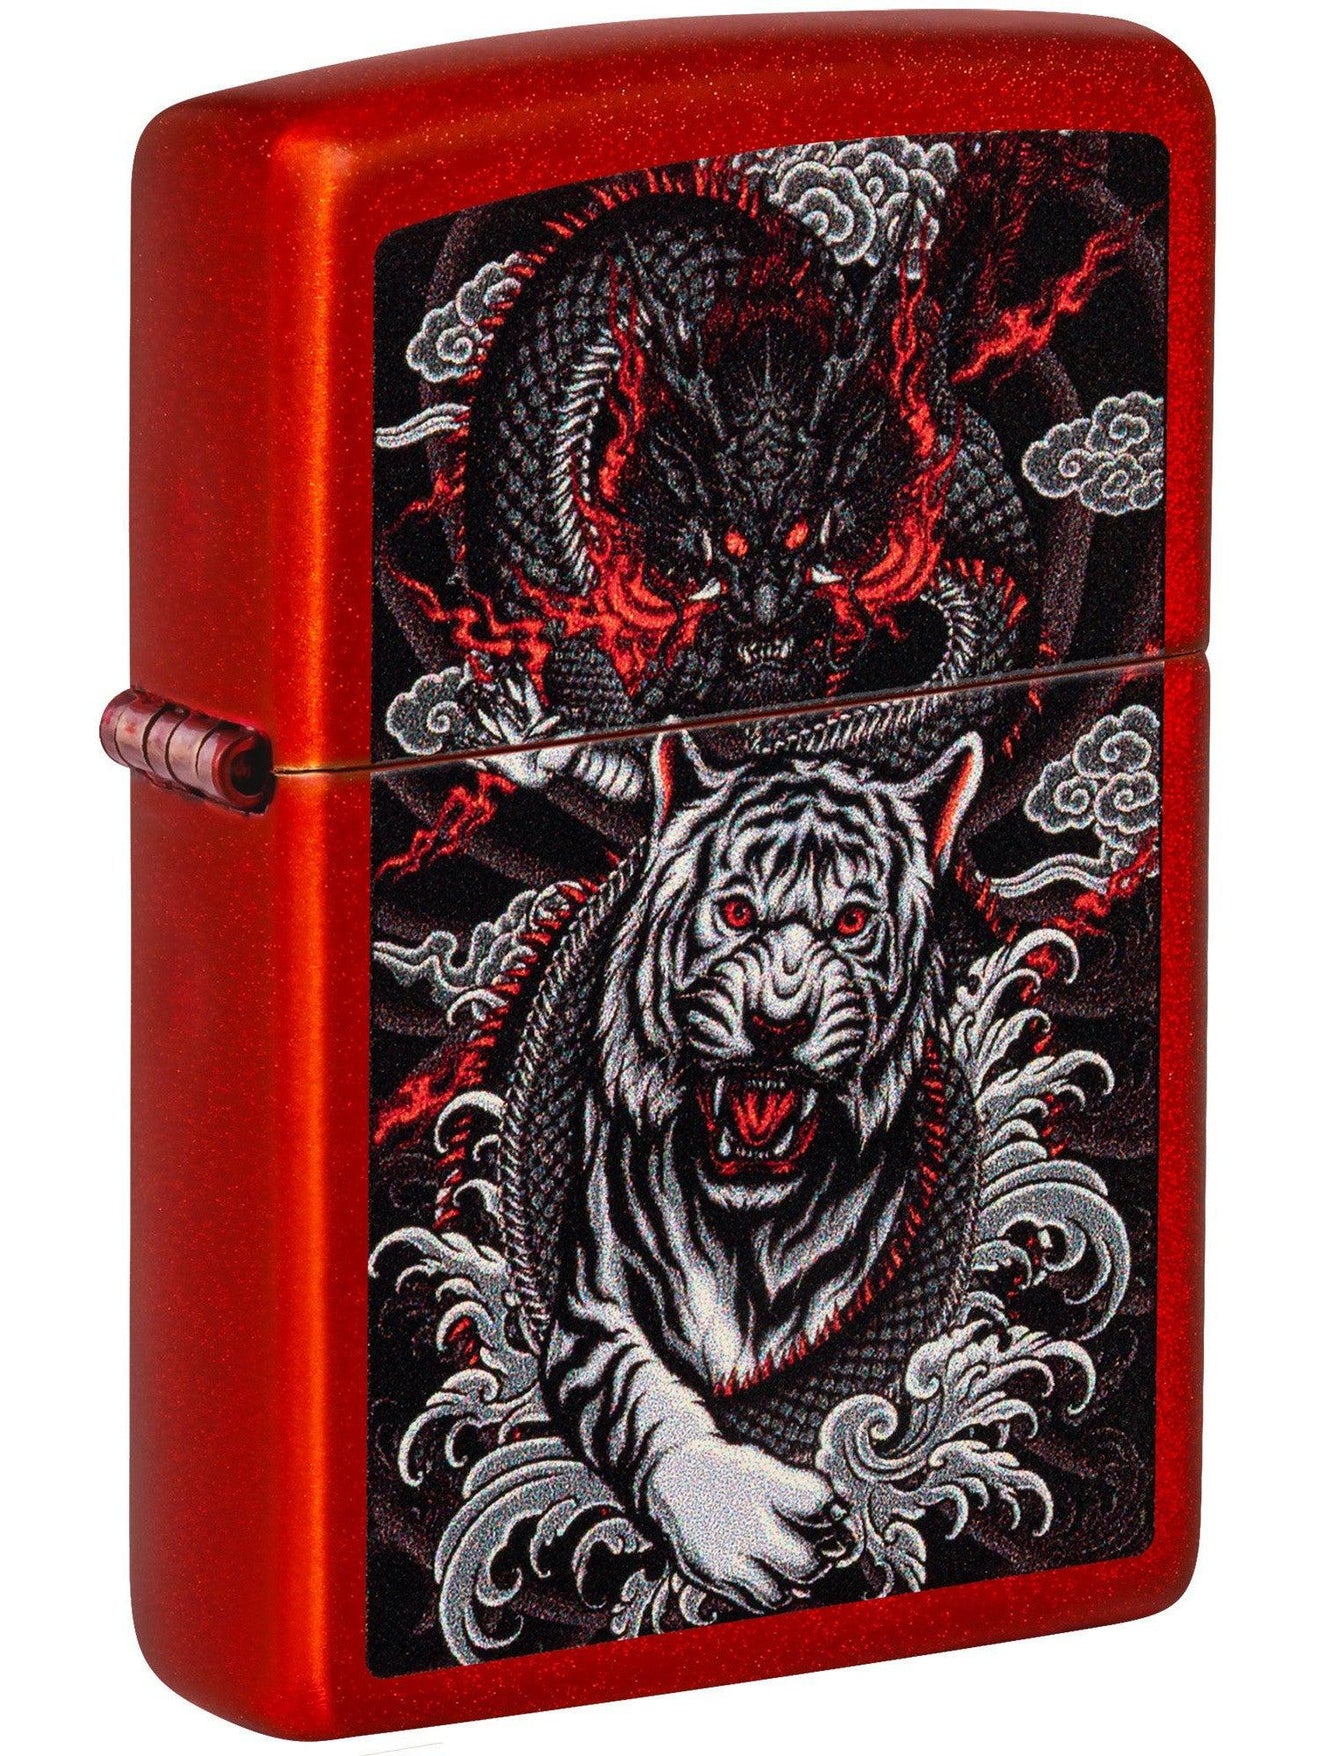 Zippo Lighter: Dragon and Tiger - Metallic Red 48933